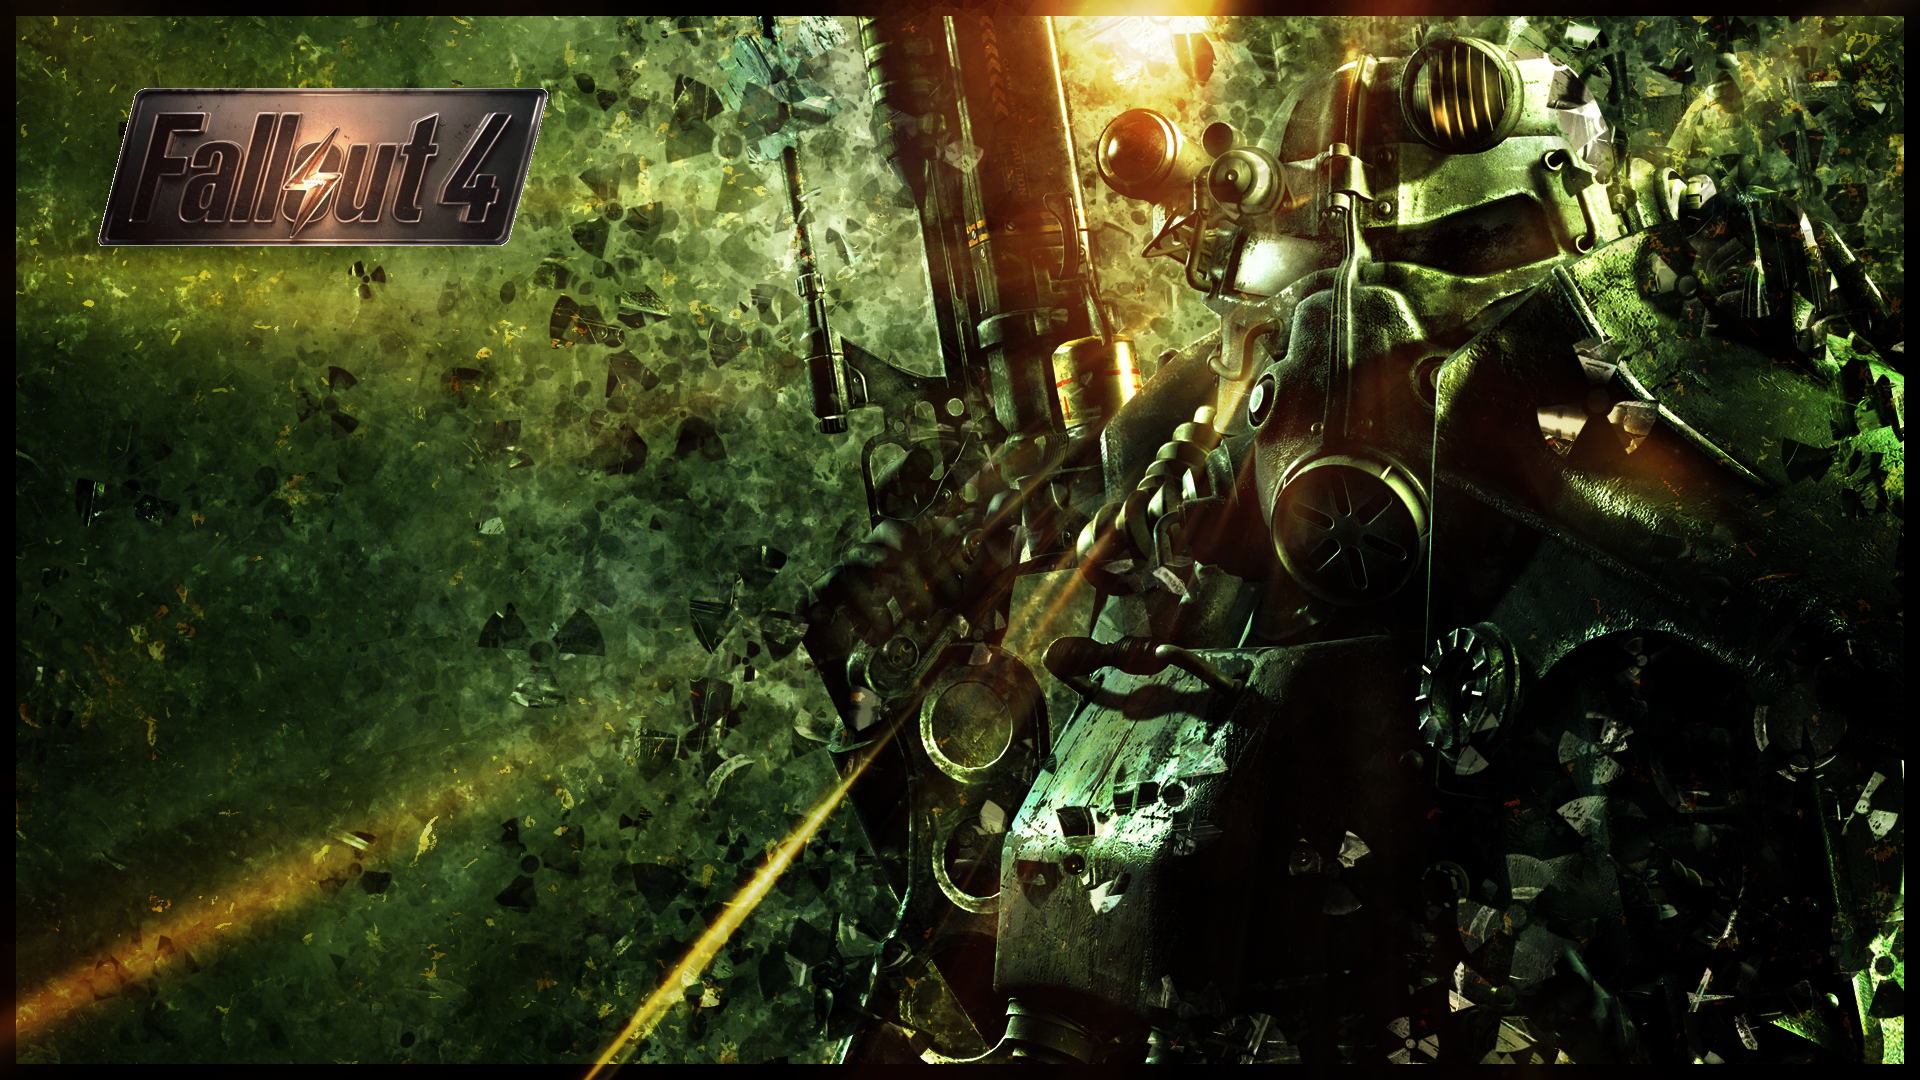 General 1920x1080 Fallout 4 power armor Fallout video games fan art PC gaming futuristic armor